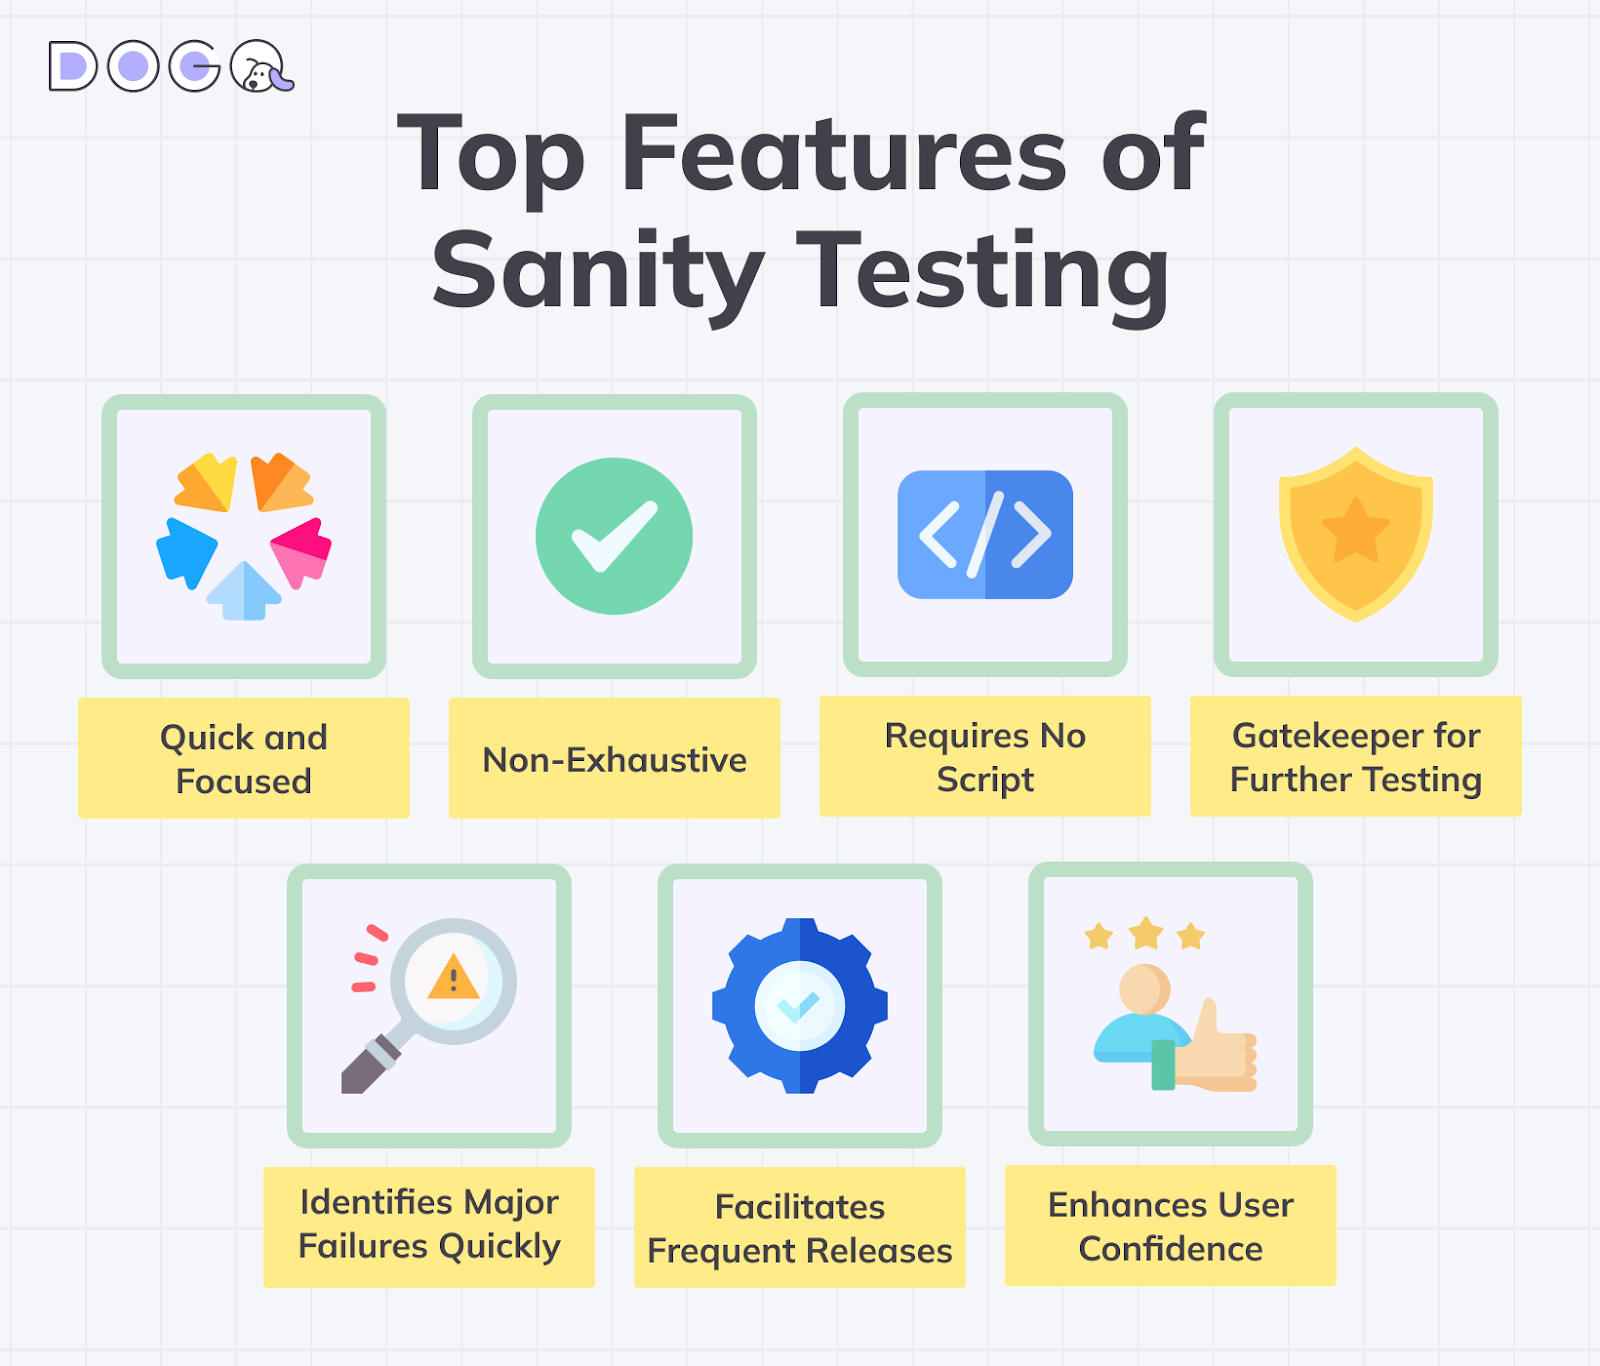 Sanity Testing Checklist by DogQ